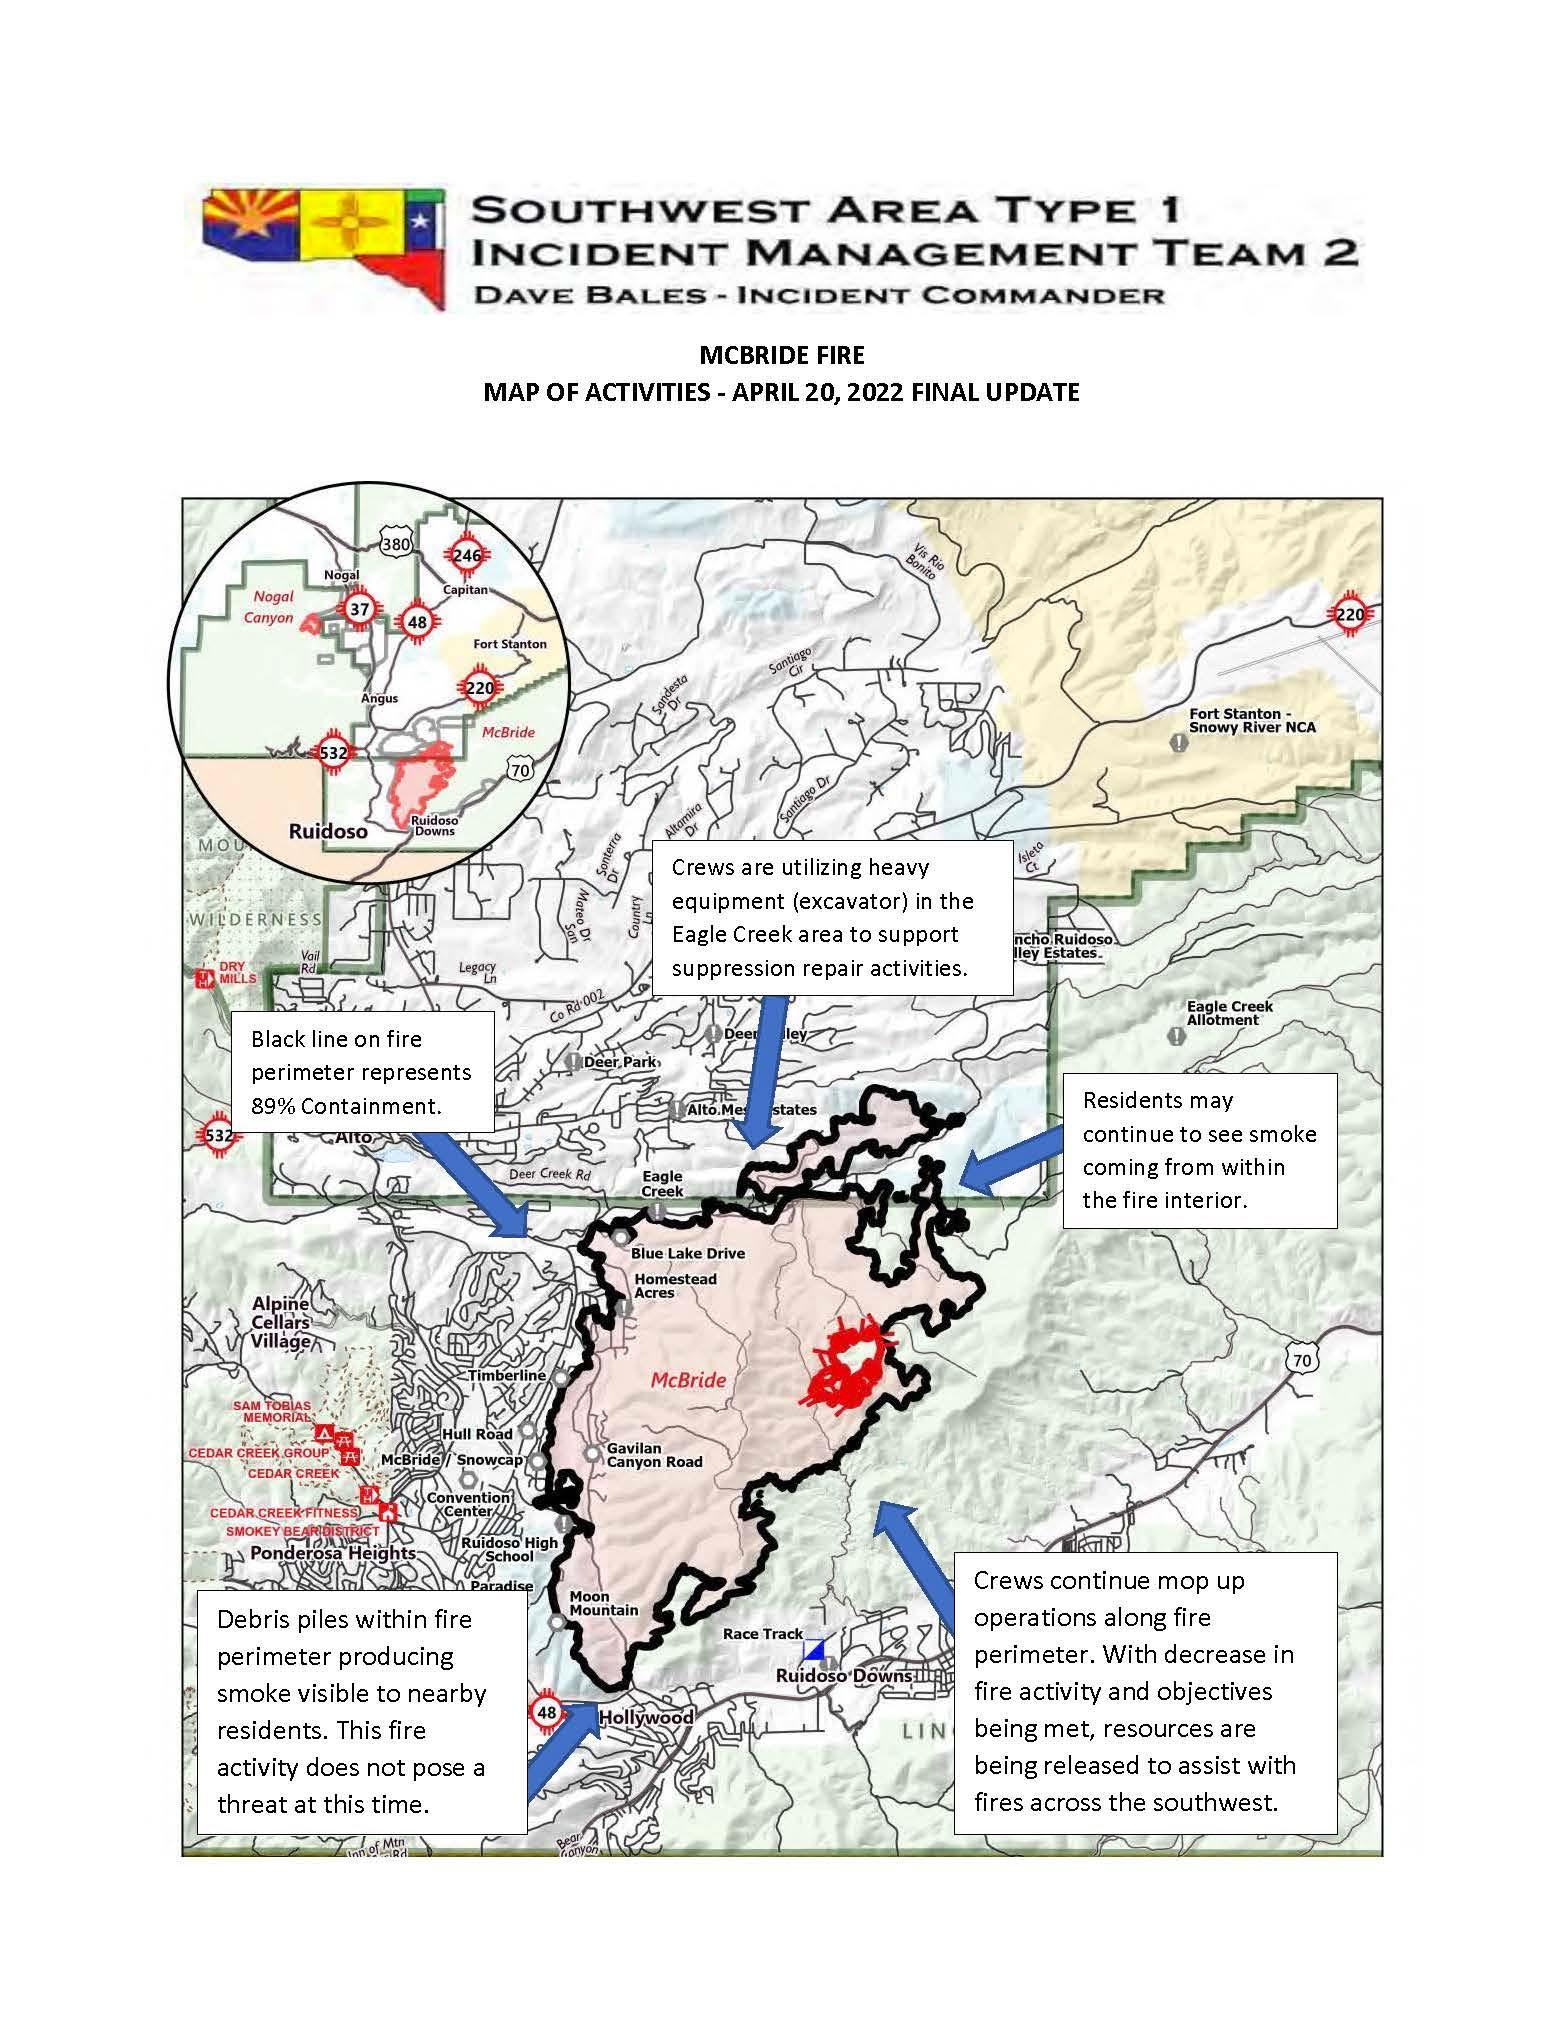 McBride Fire Map of Activity April 20, 2022